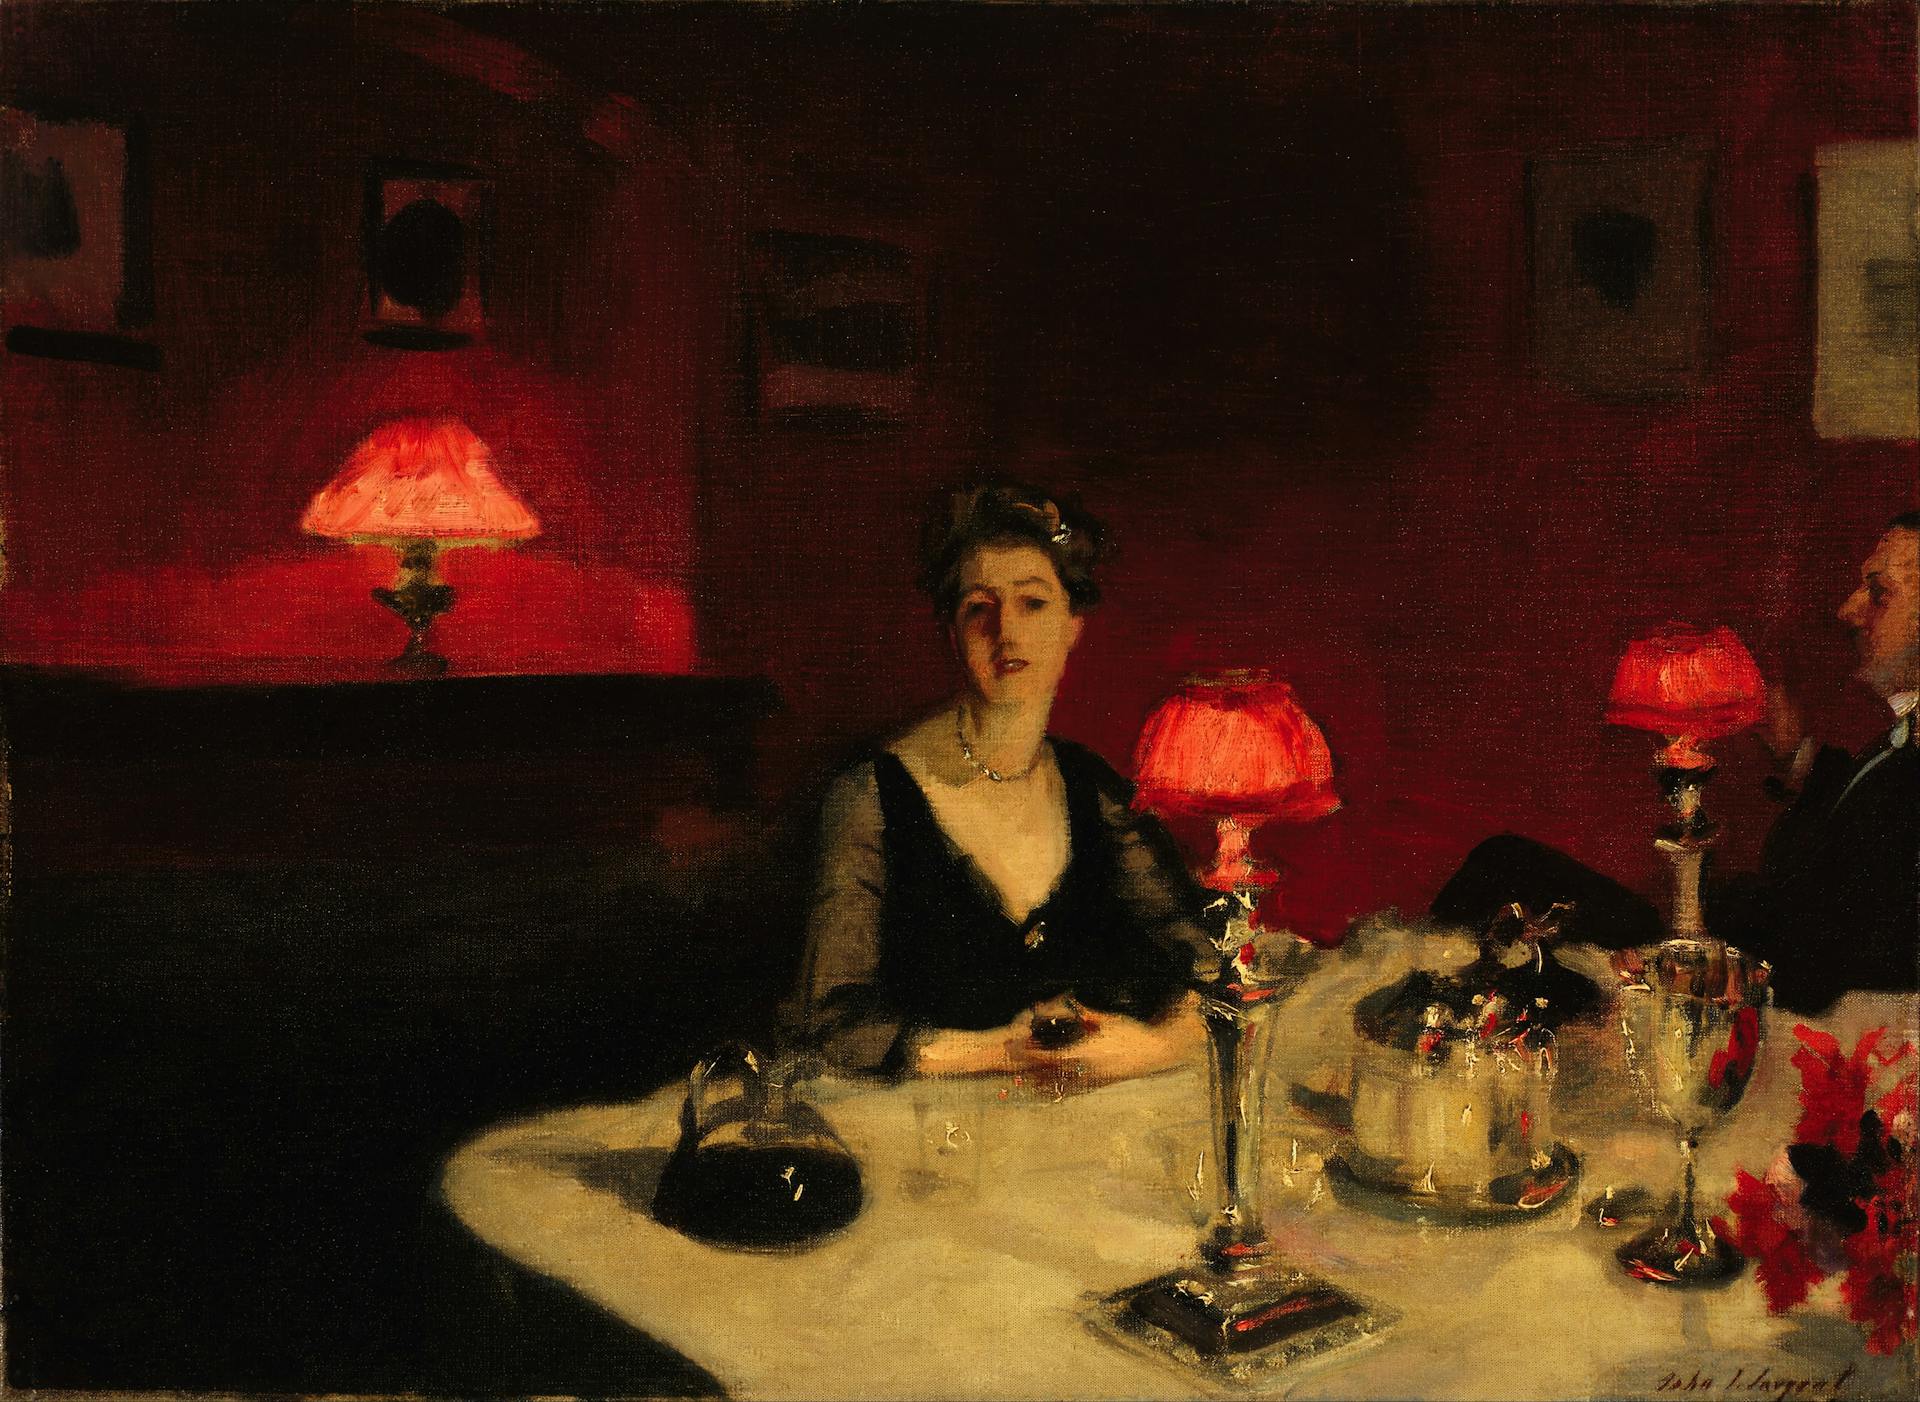 Le verre de porto (A Dinner Table at Night), 1884, John Singer Sargent